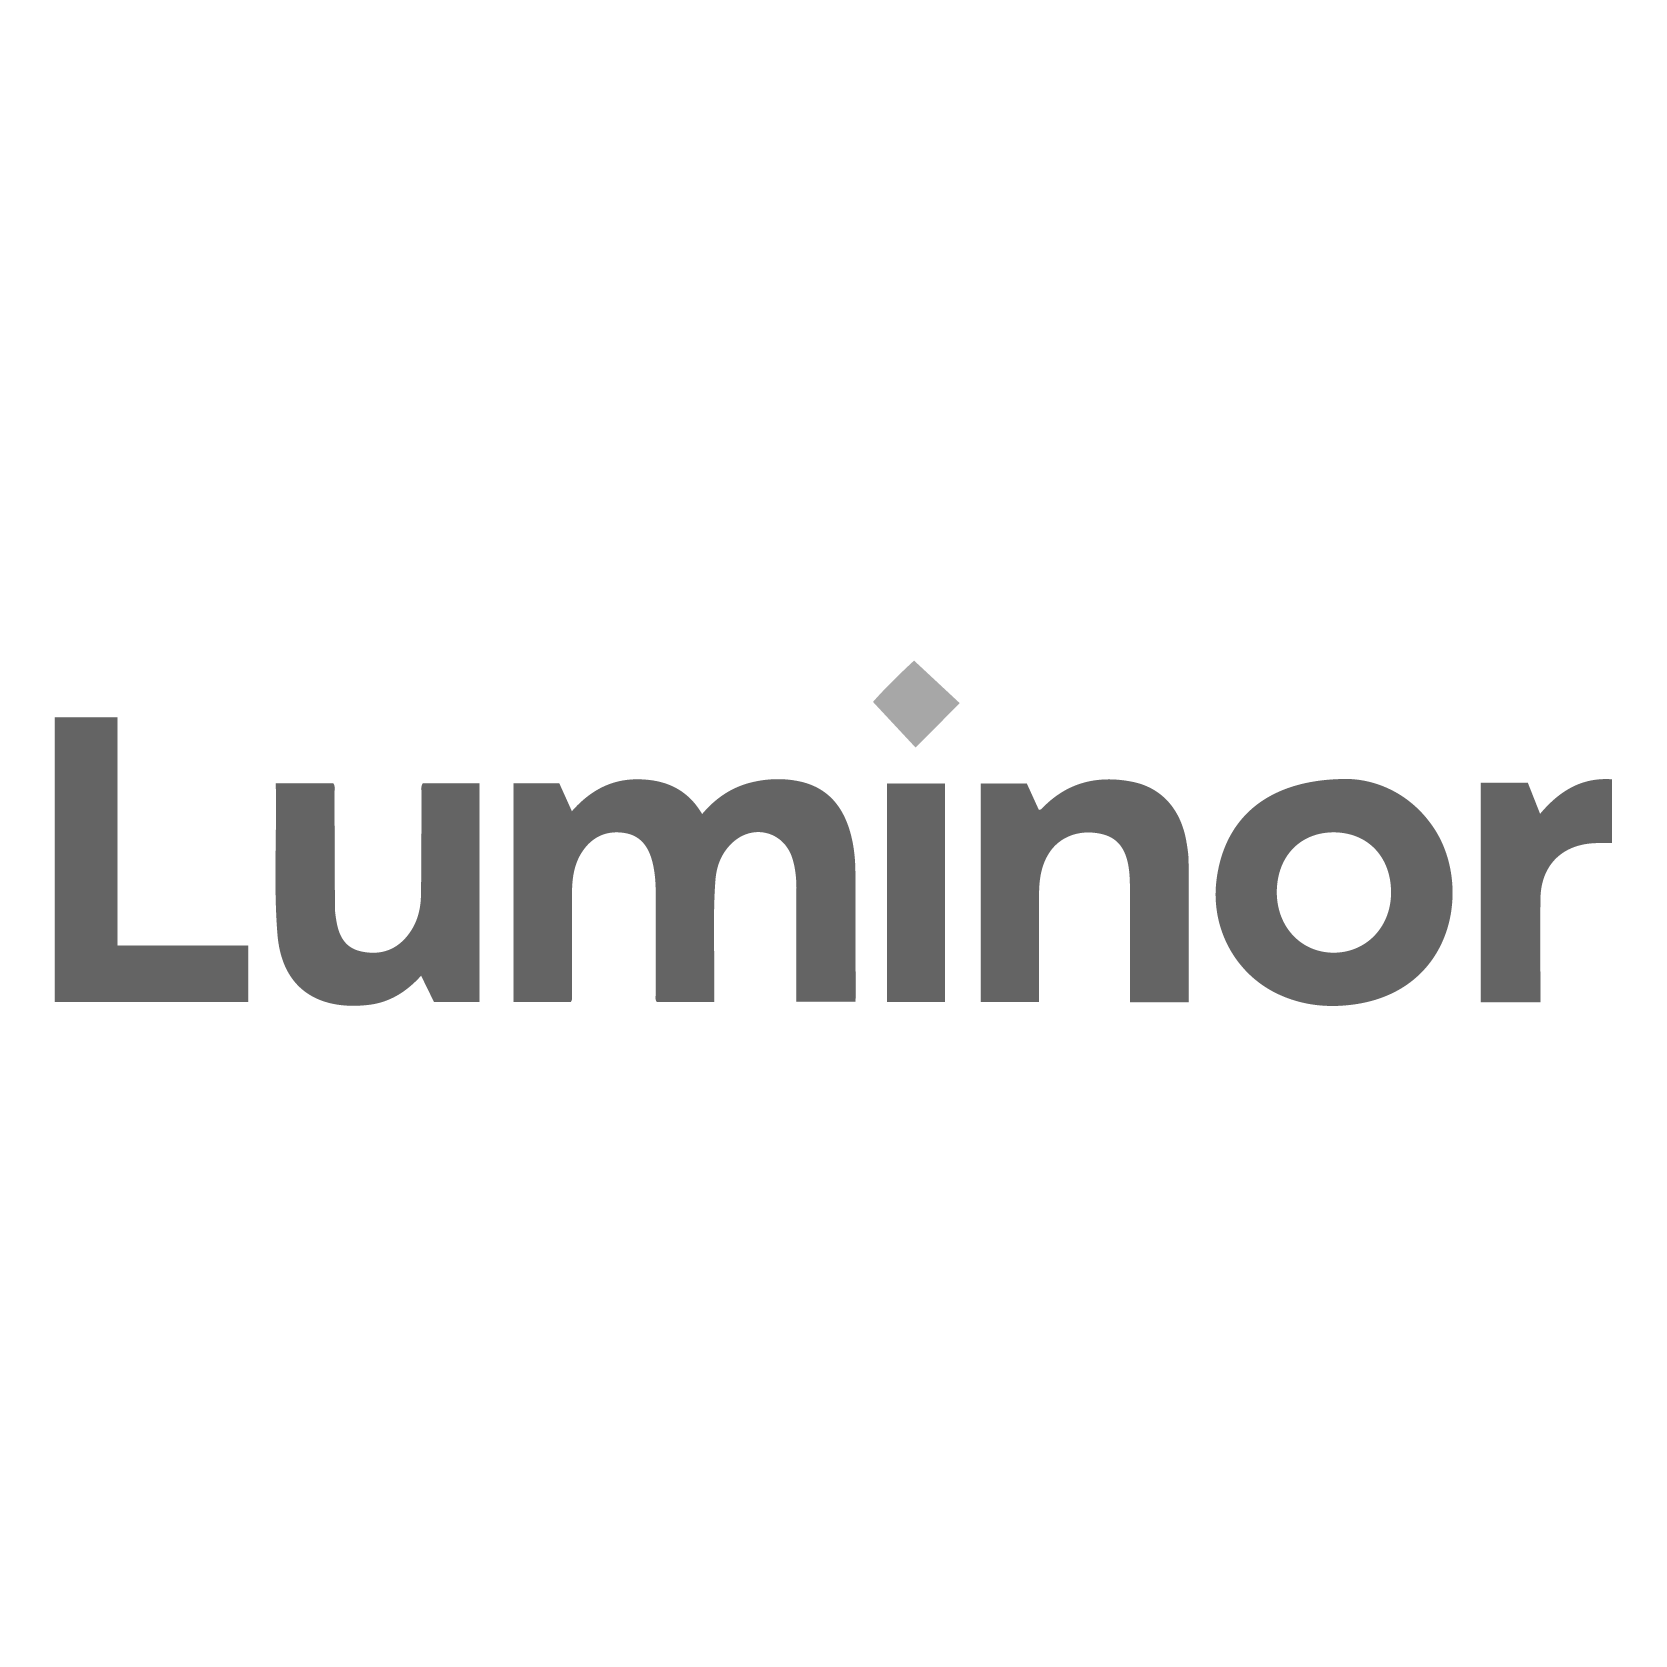 Luminor-01